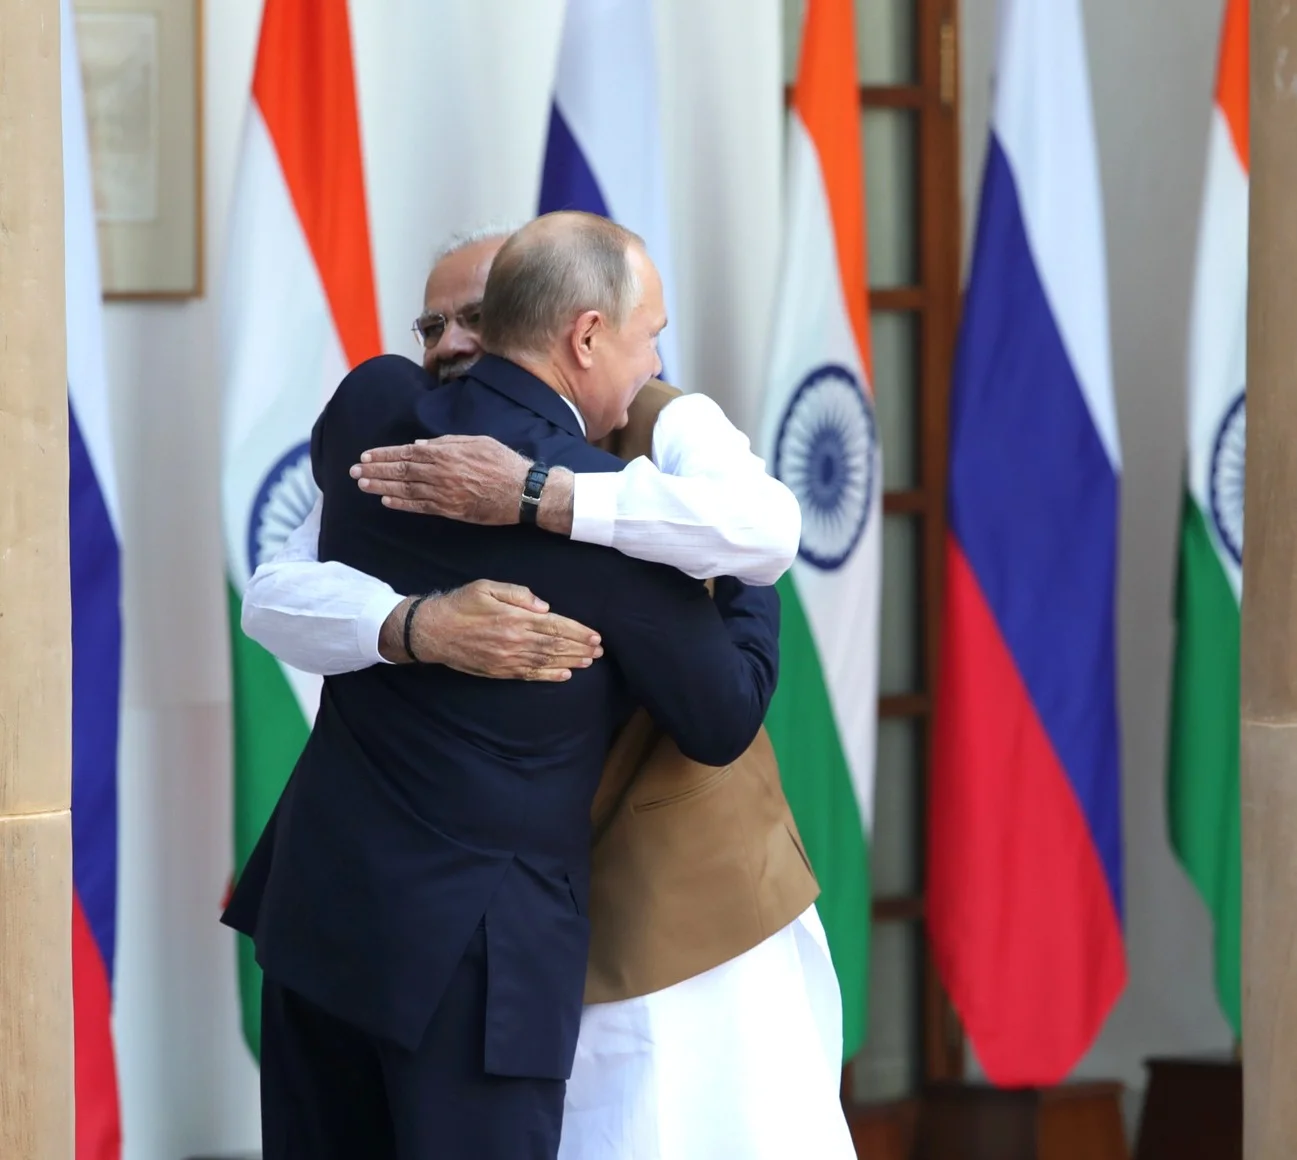 Putin hails ‘patriot’ PM Modi, says India has a ‘great future’